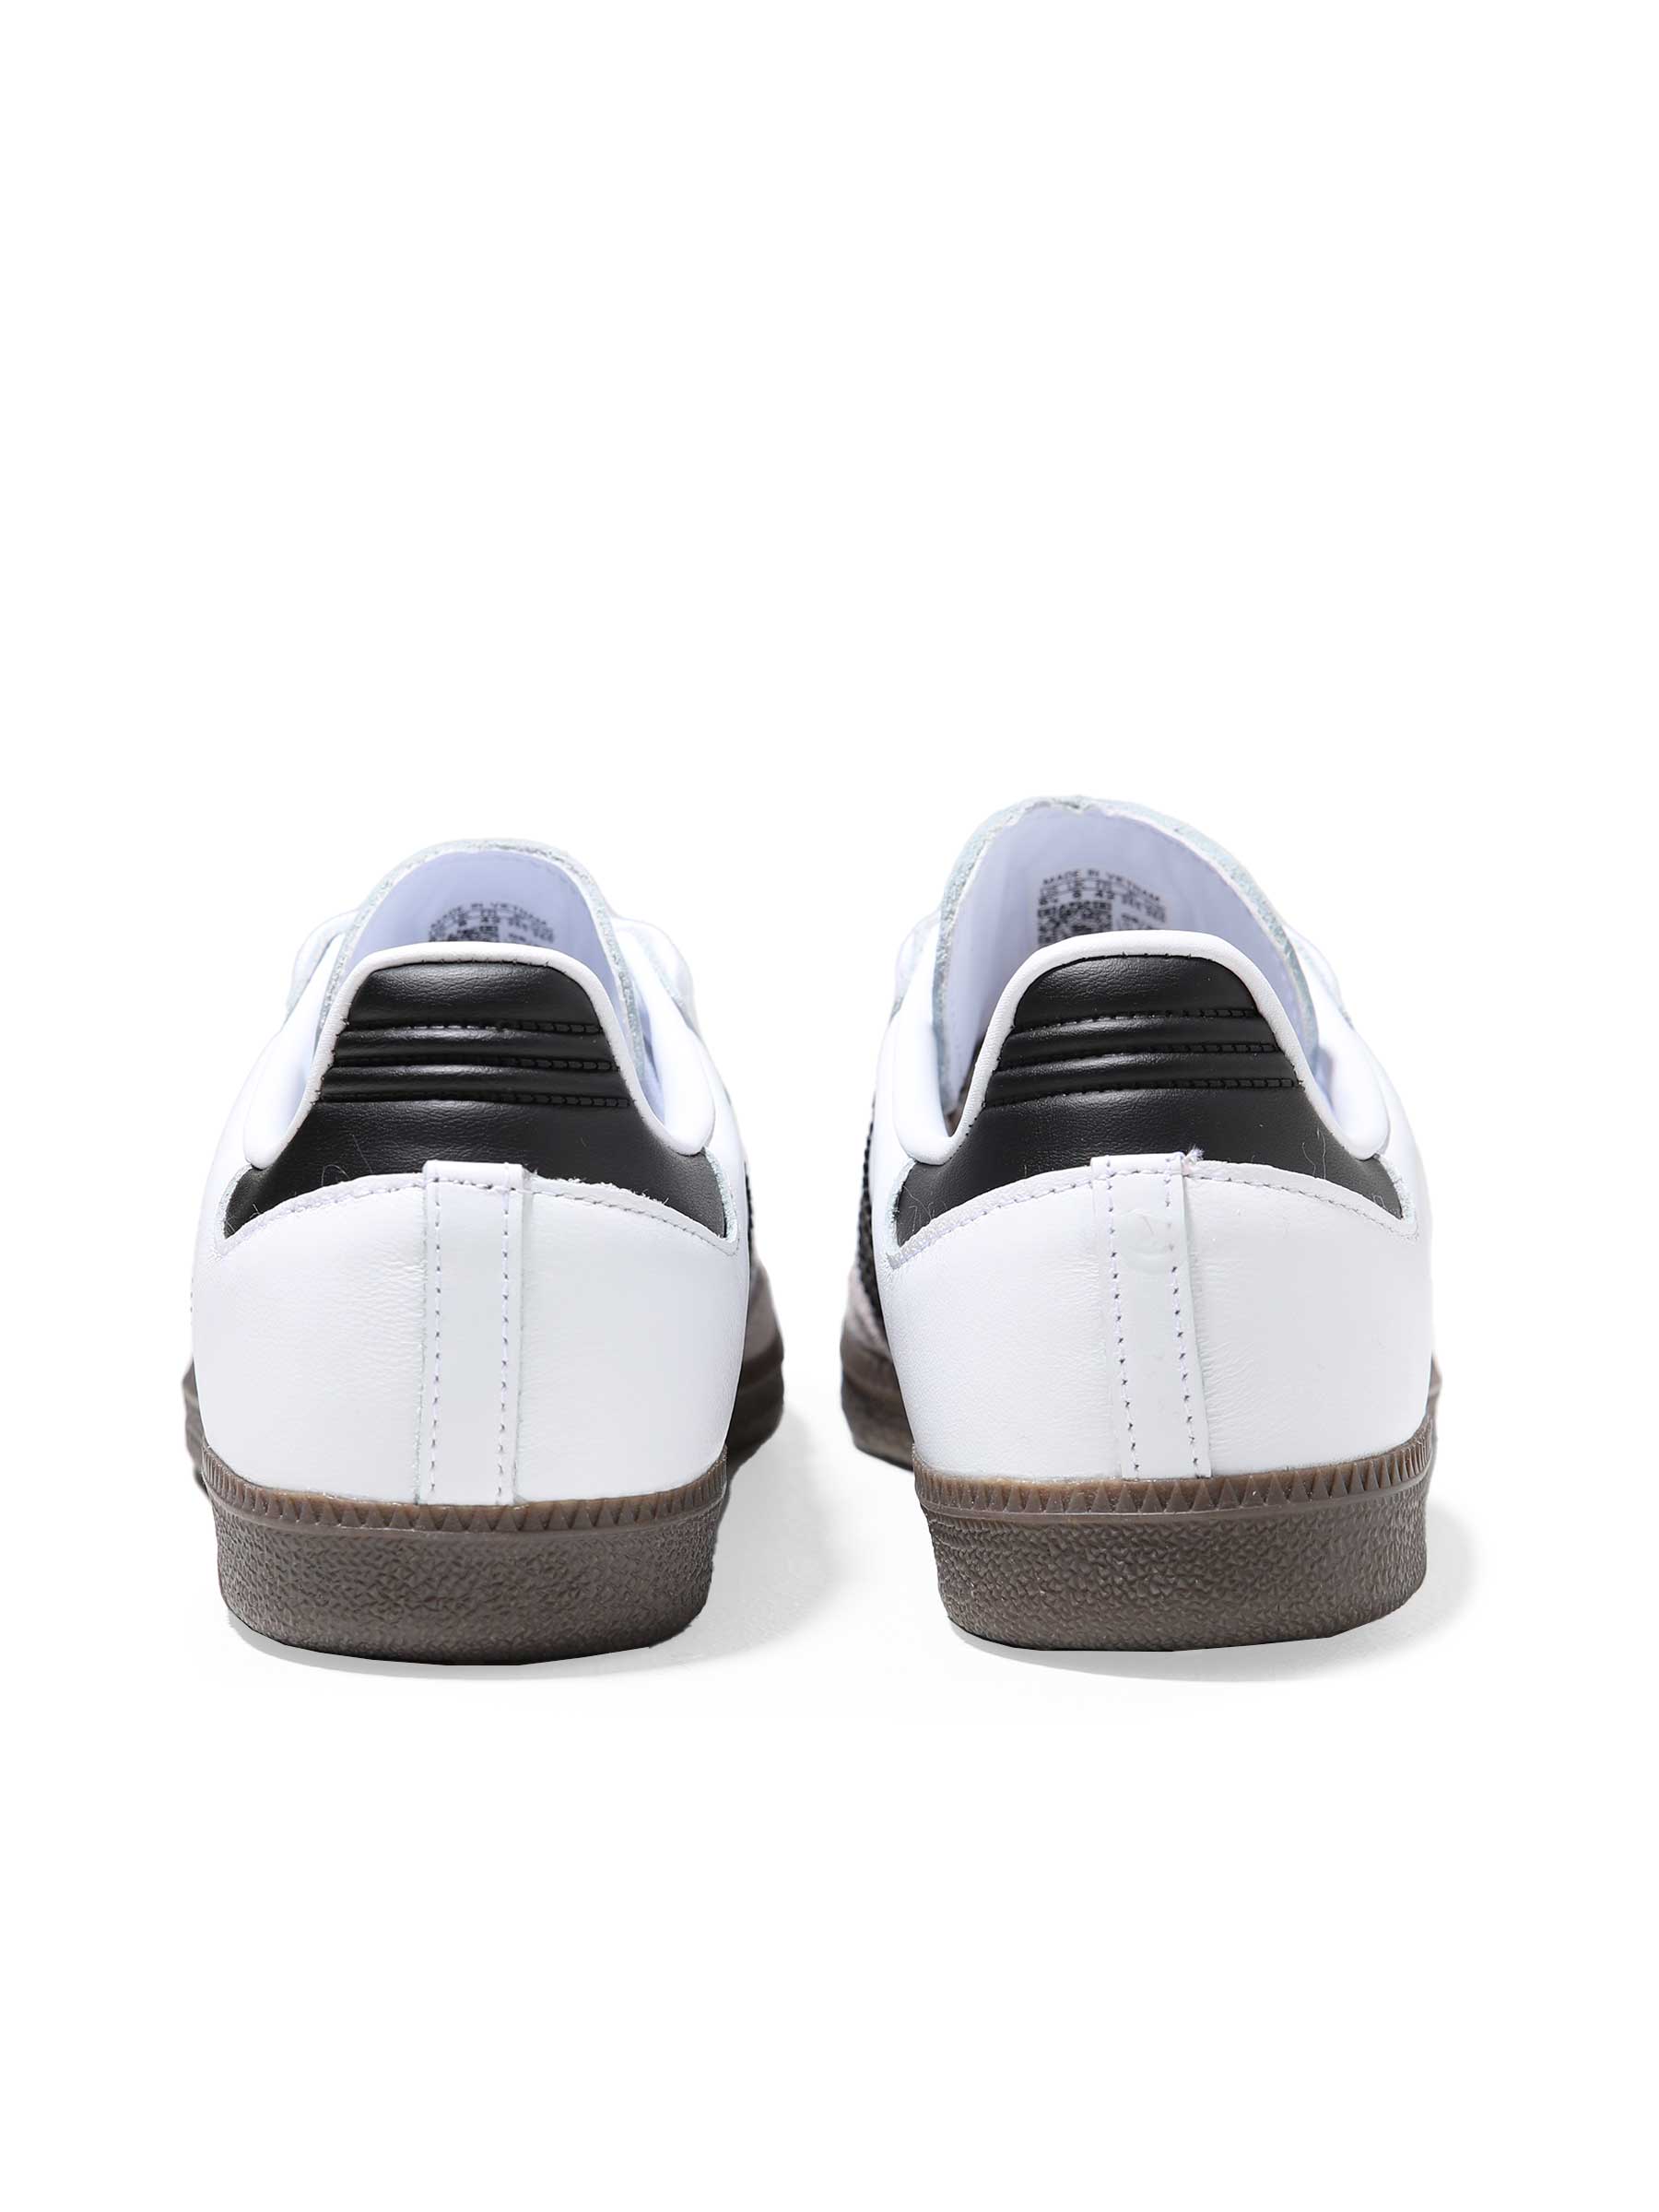 adidas Samba OG Footwear White Core Black Clear Granite B75806 ...